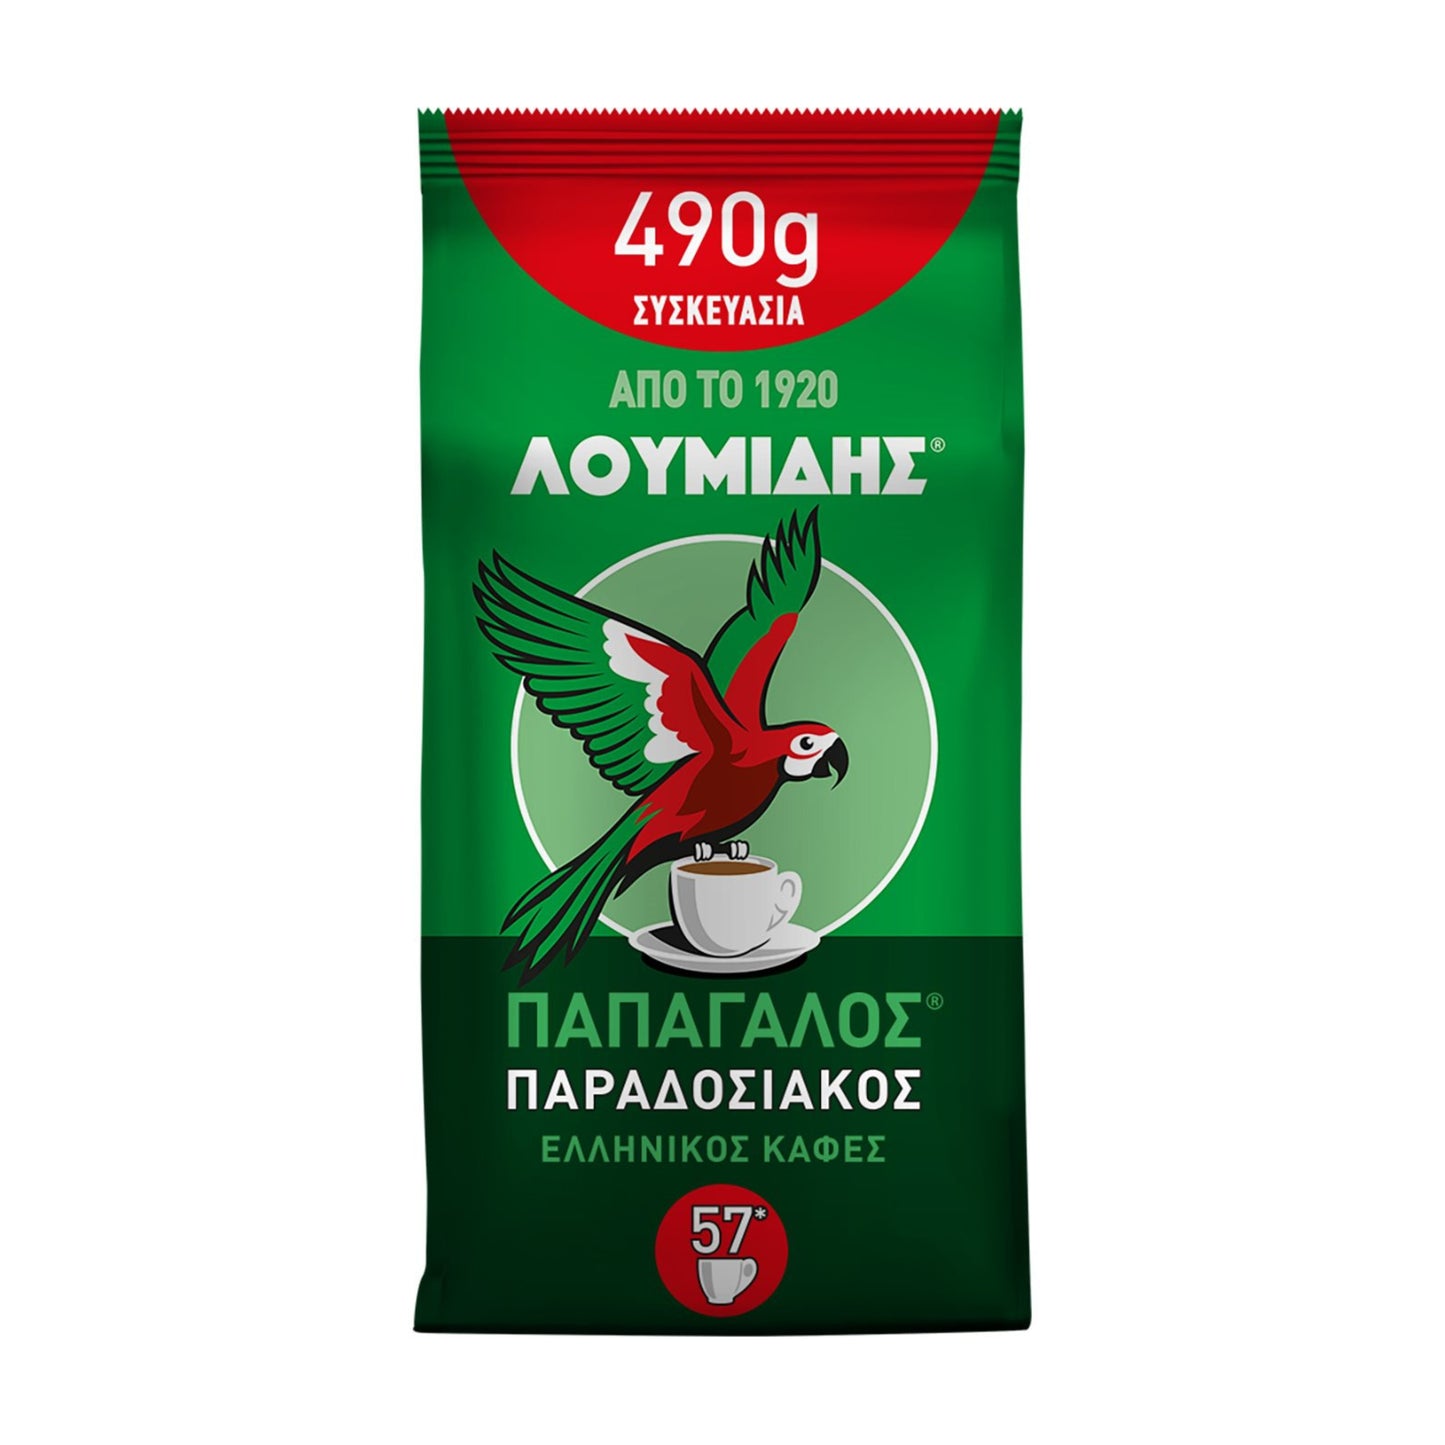 Greek coffee Loumidis - 490g